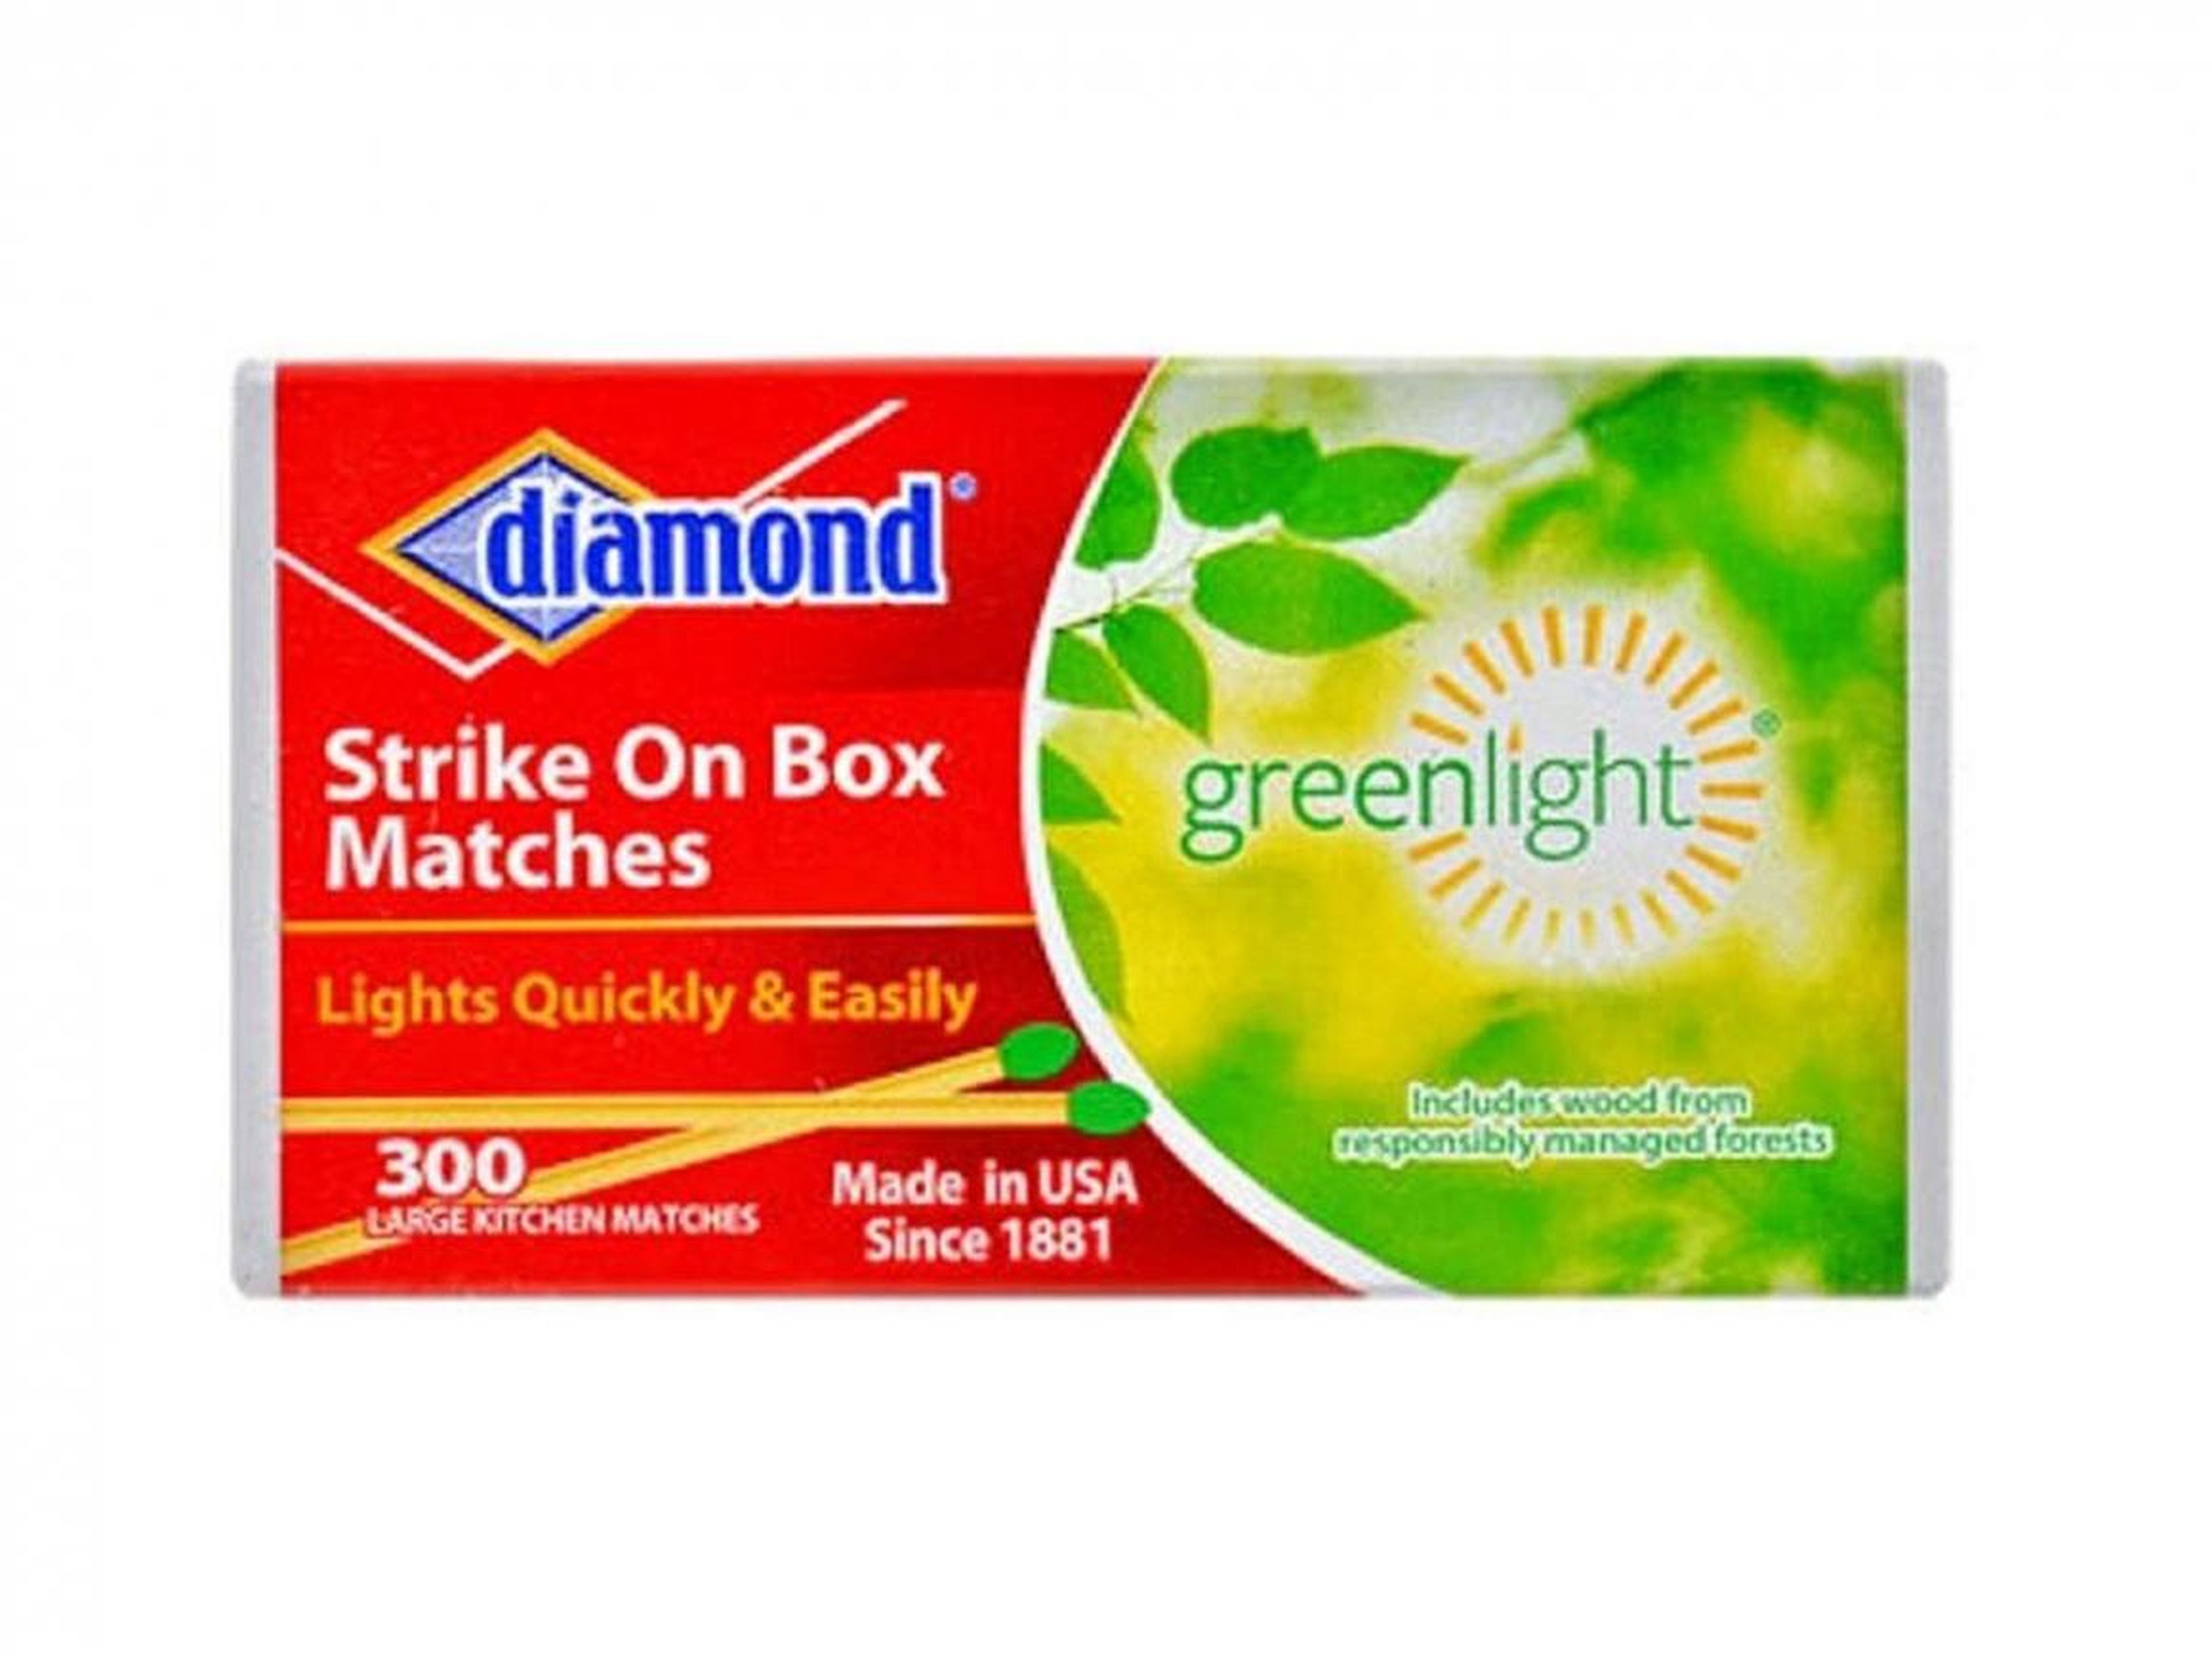 Greenlight matches